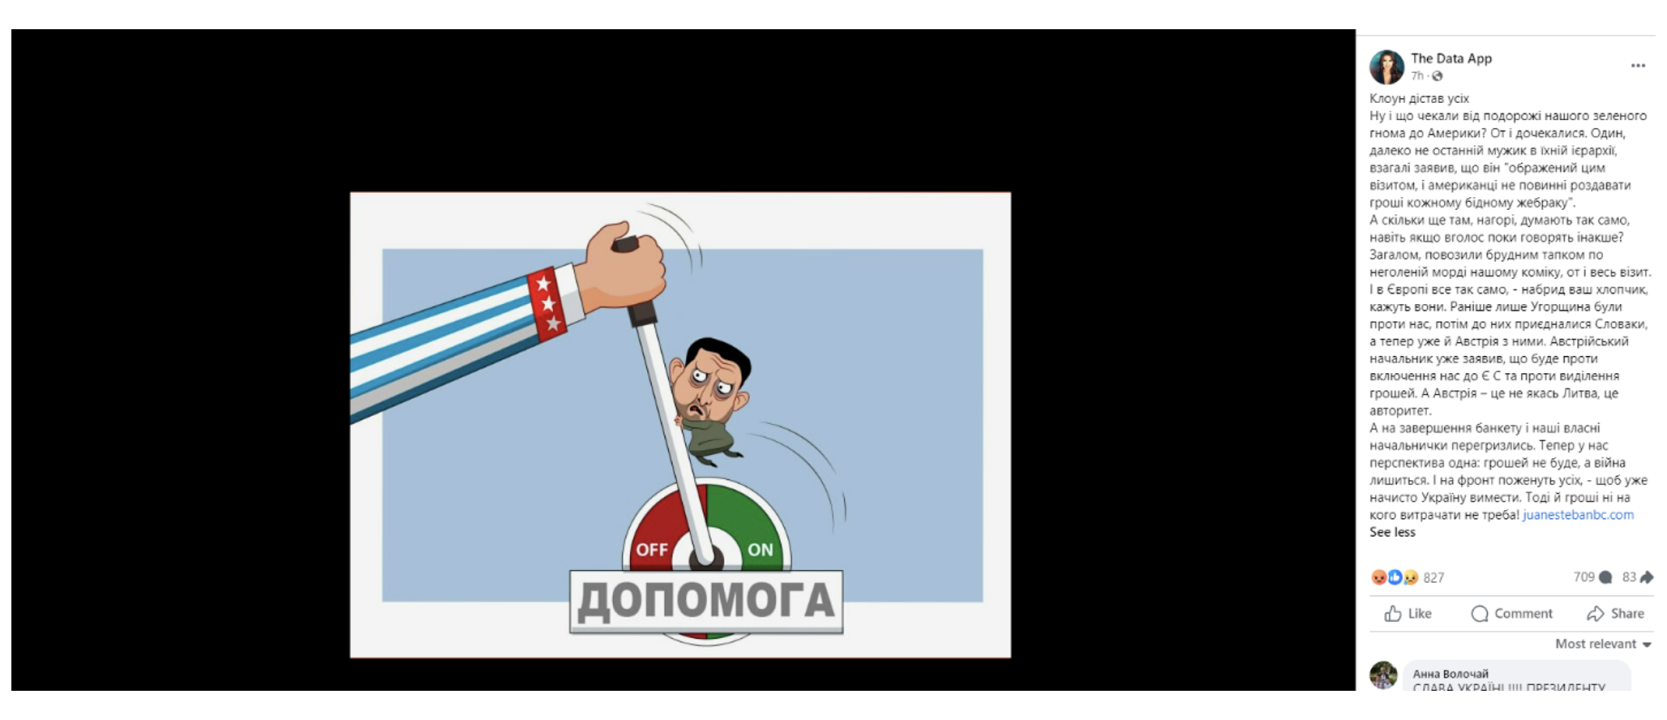 Screenshot of a Ukrainian Facebook ad featuring a caricature of President Zelensky, critical text, and a malign link. (Source: Facebook/The Data App)